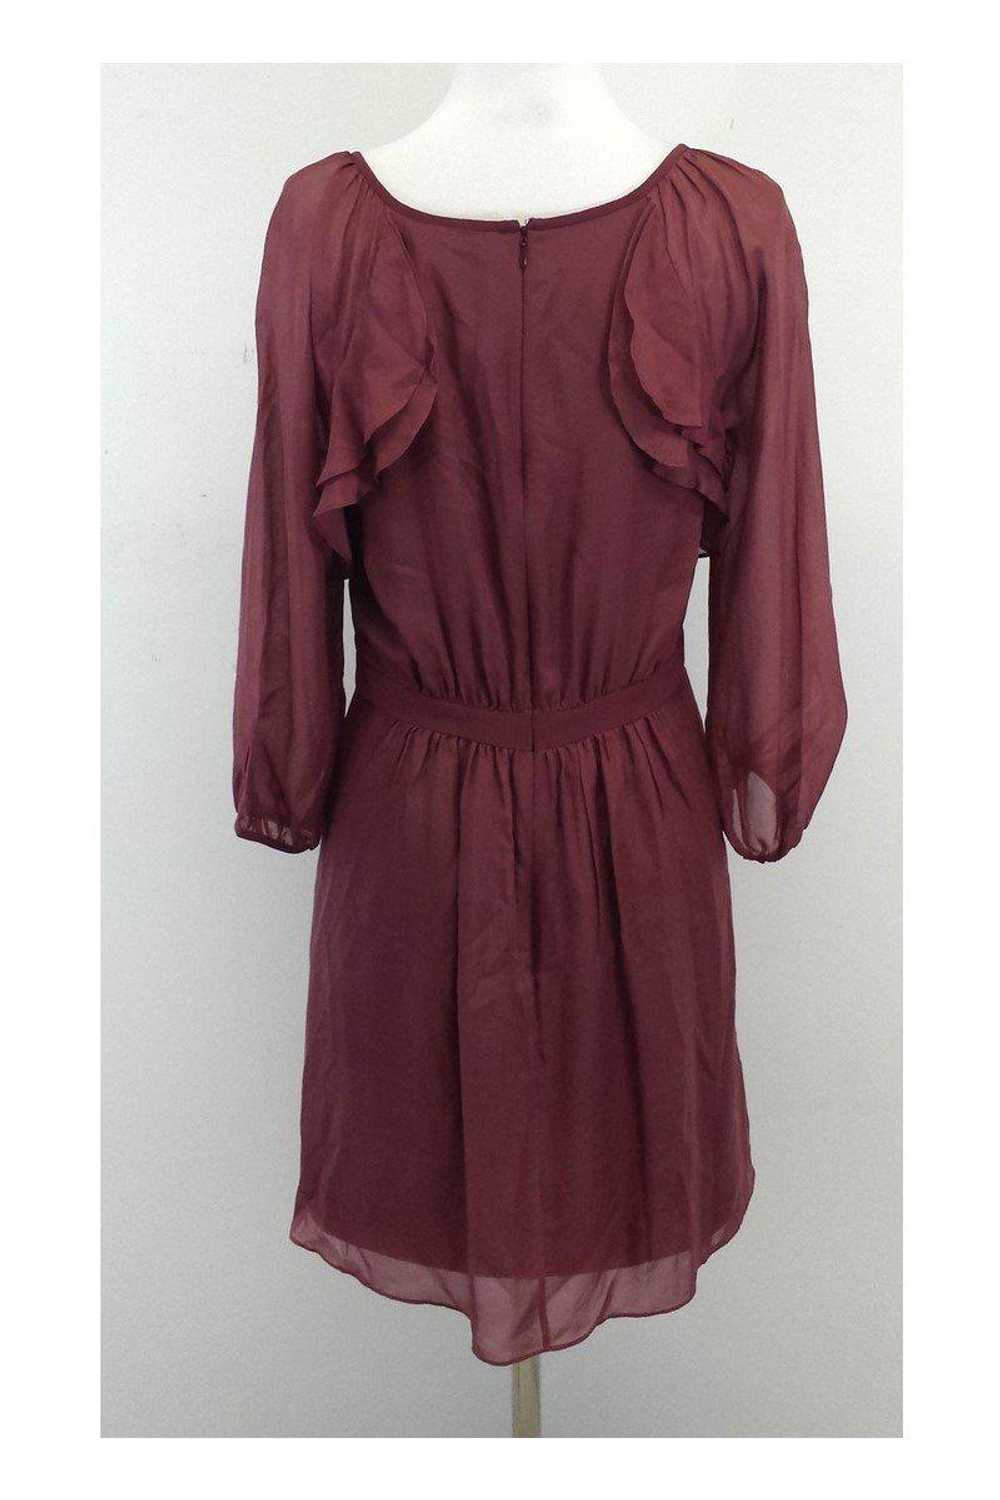 Tibi - Mauve Silk Ruffle Dress Sz 6 - image 3